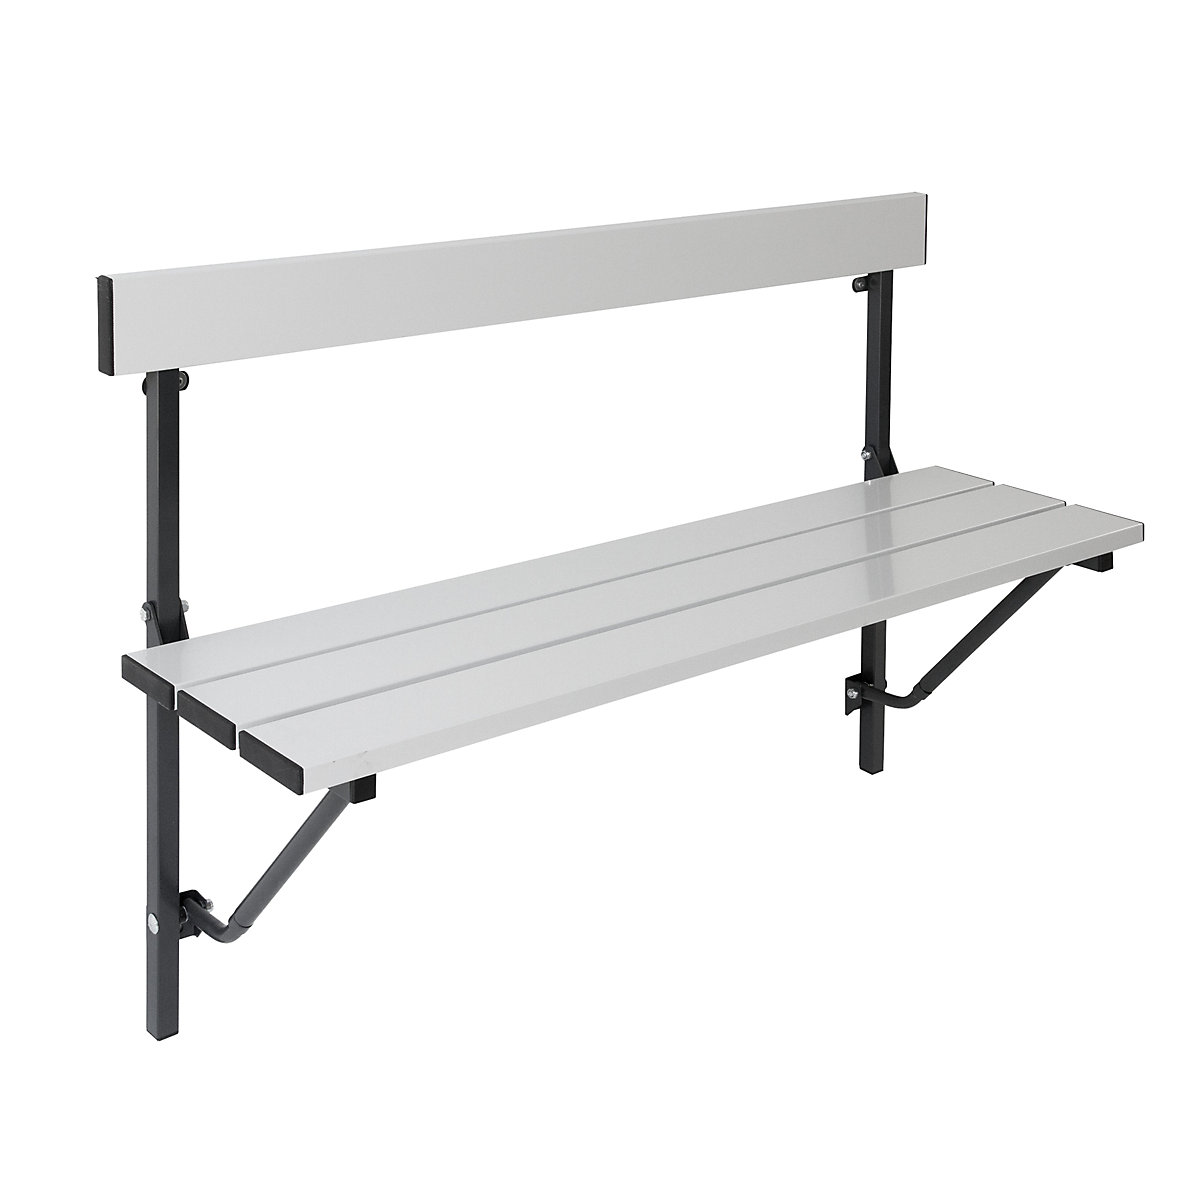 Sypro – Folding wall-mounted bench (Product illustration 3)